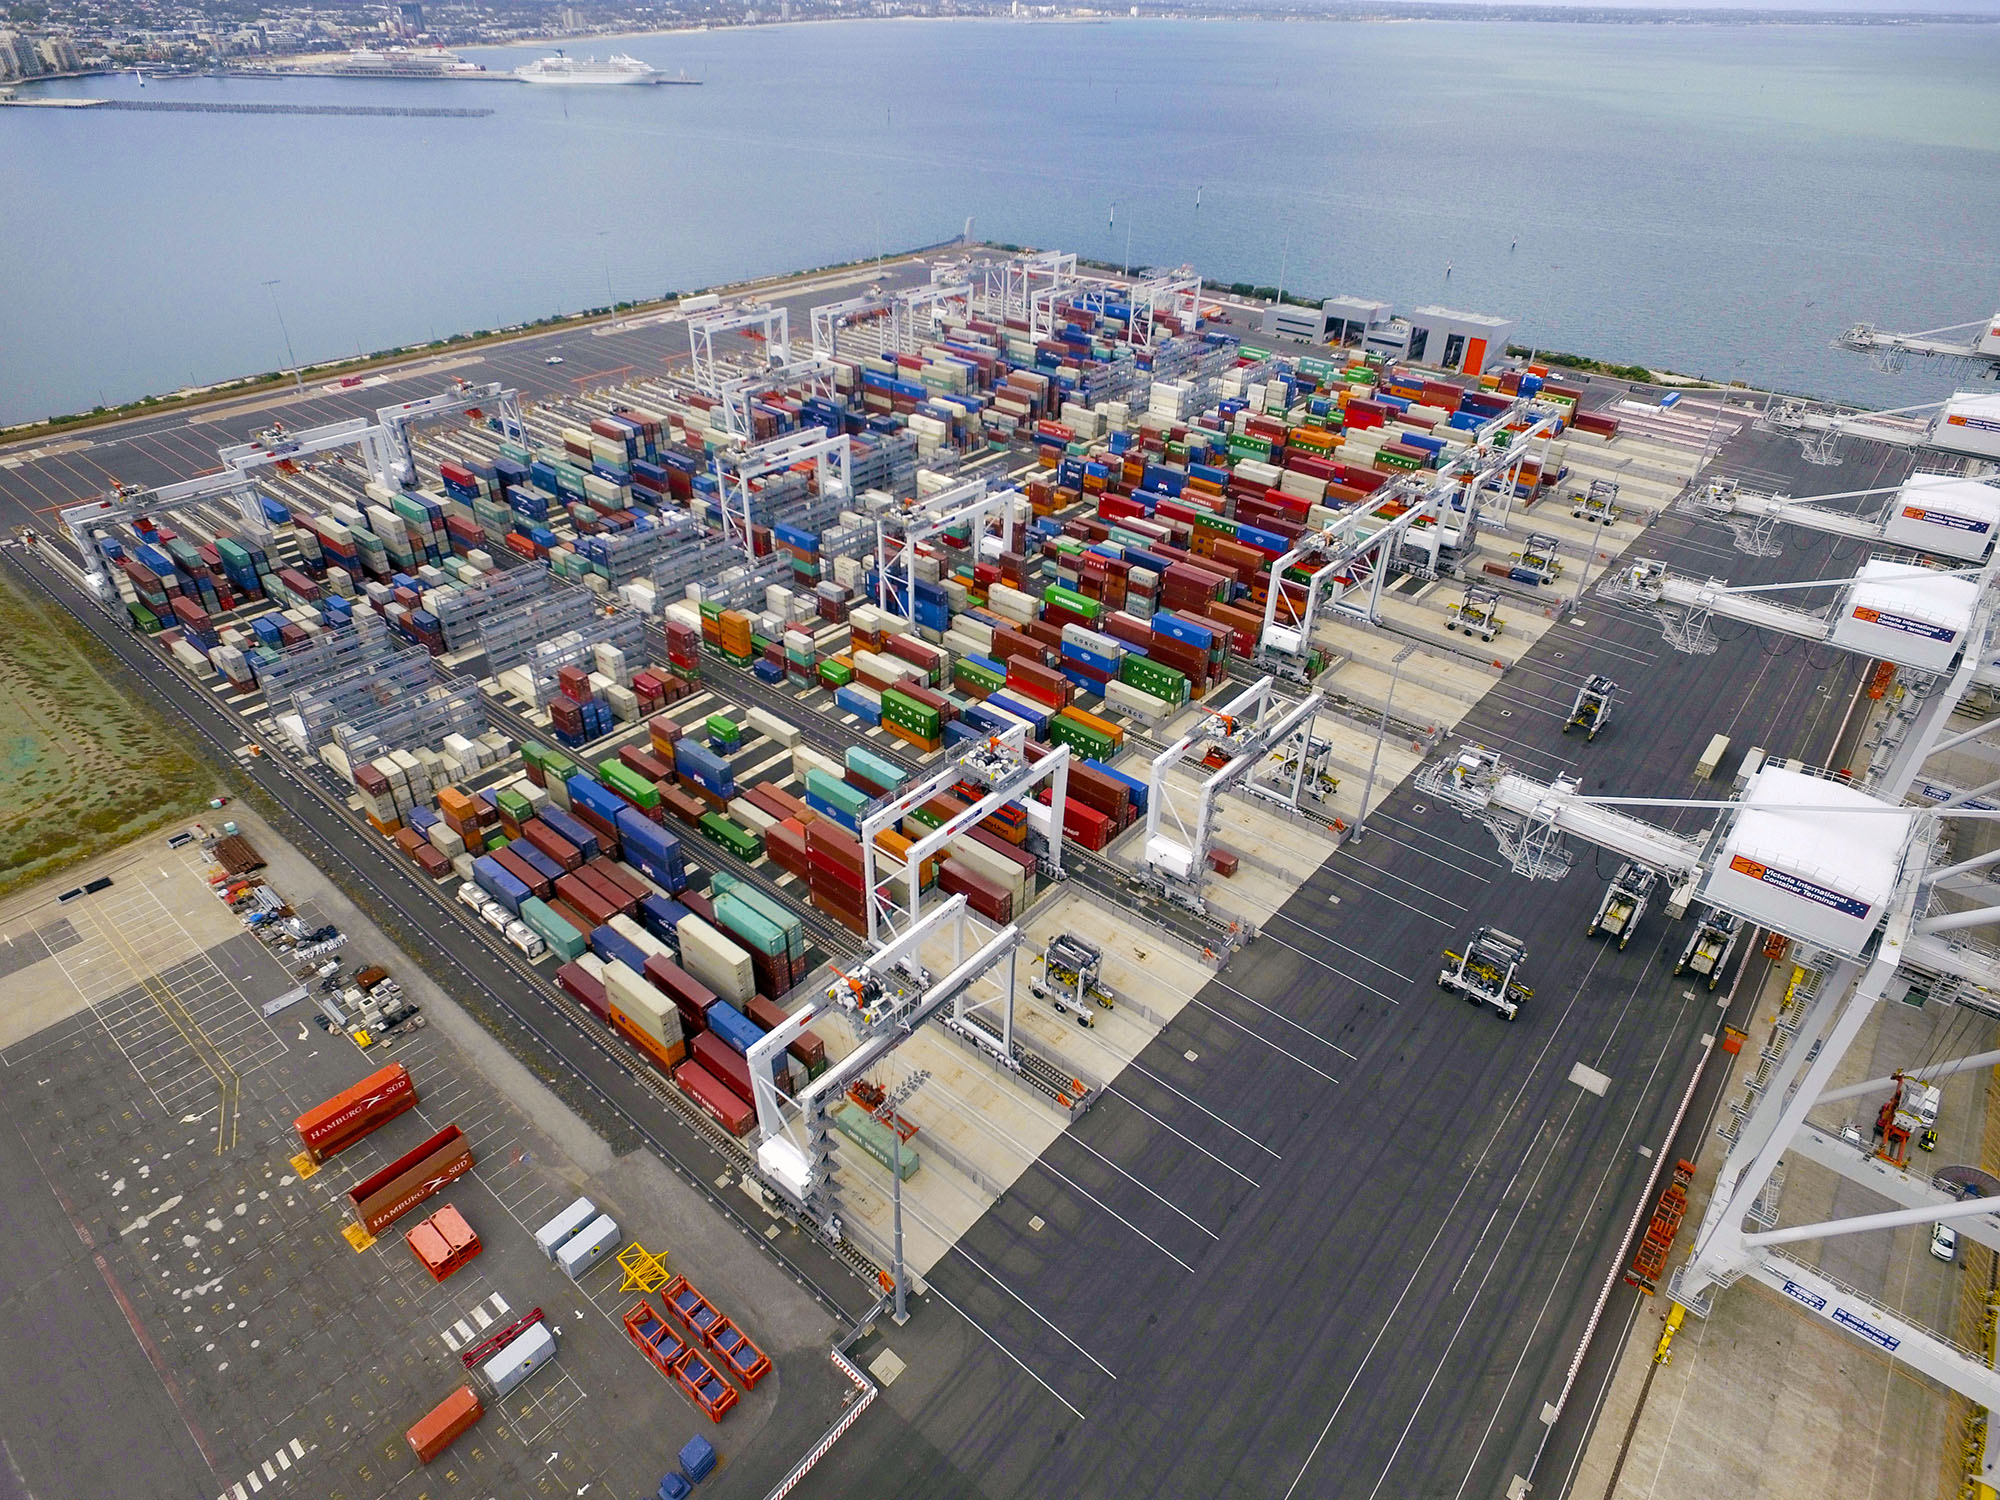 Image 1: Victoria International Container Terminal